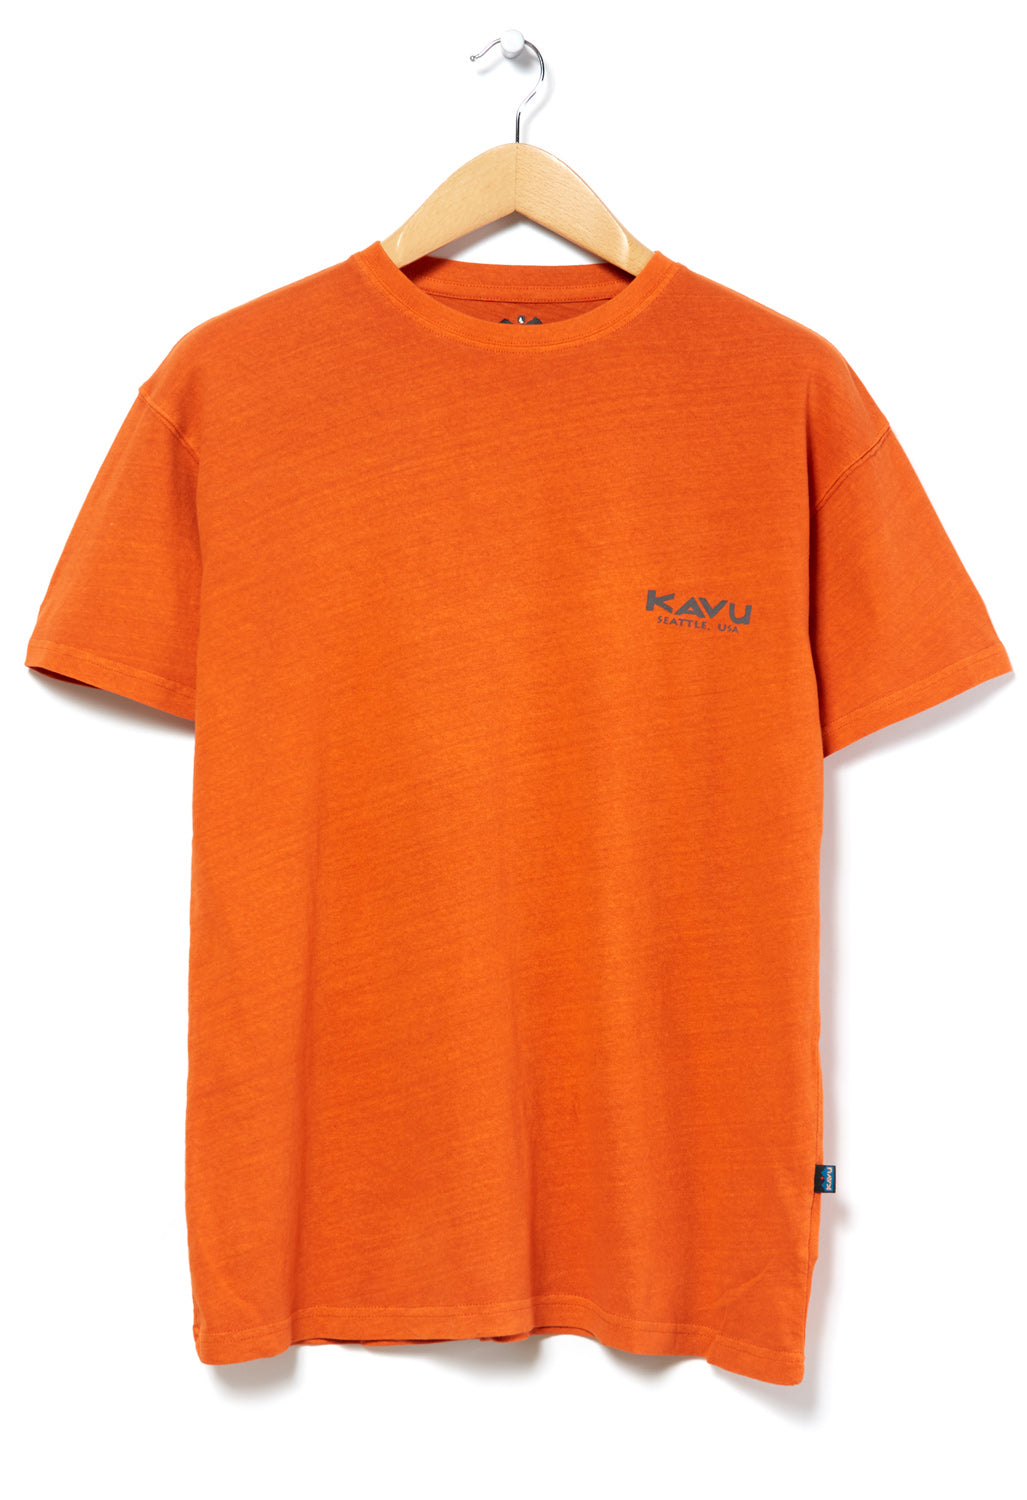 KAVU Busy Livin' T-Shirt - Burnt Orange